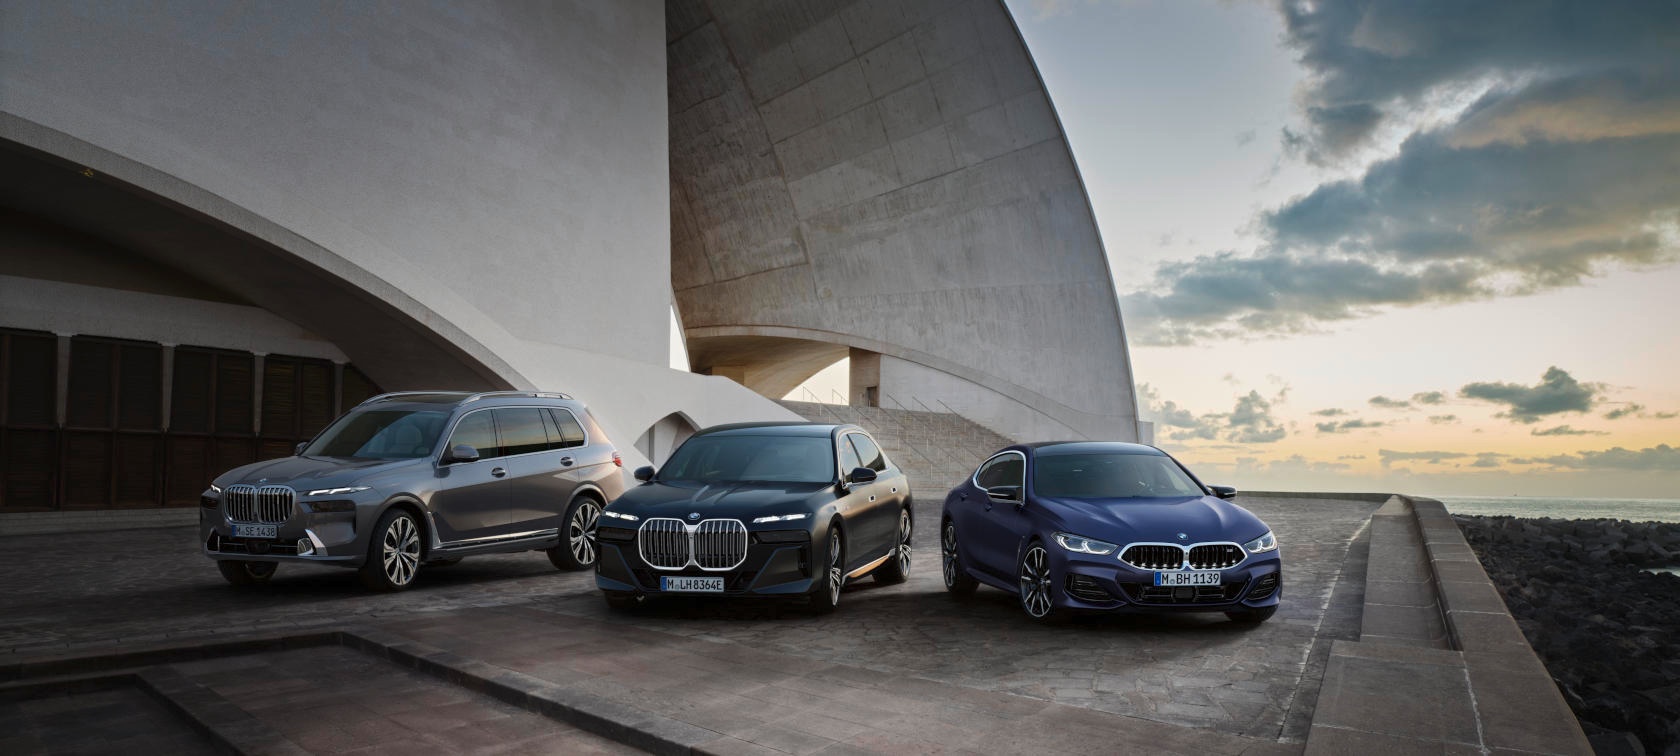 Diplomatic Cars – Vehicles for diplomats – BMW Berlin